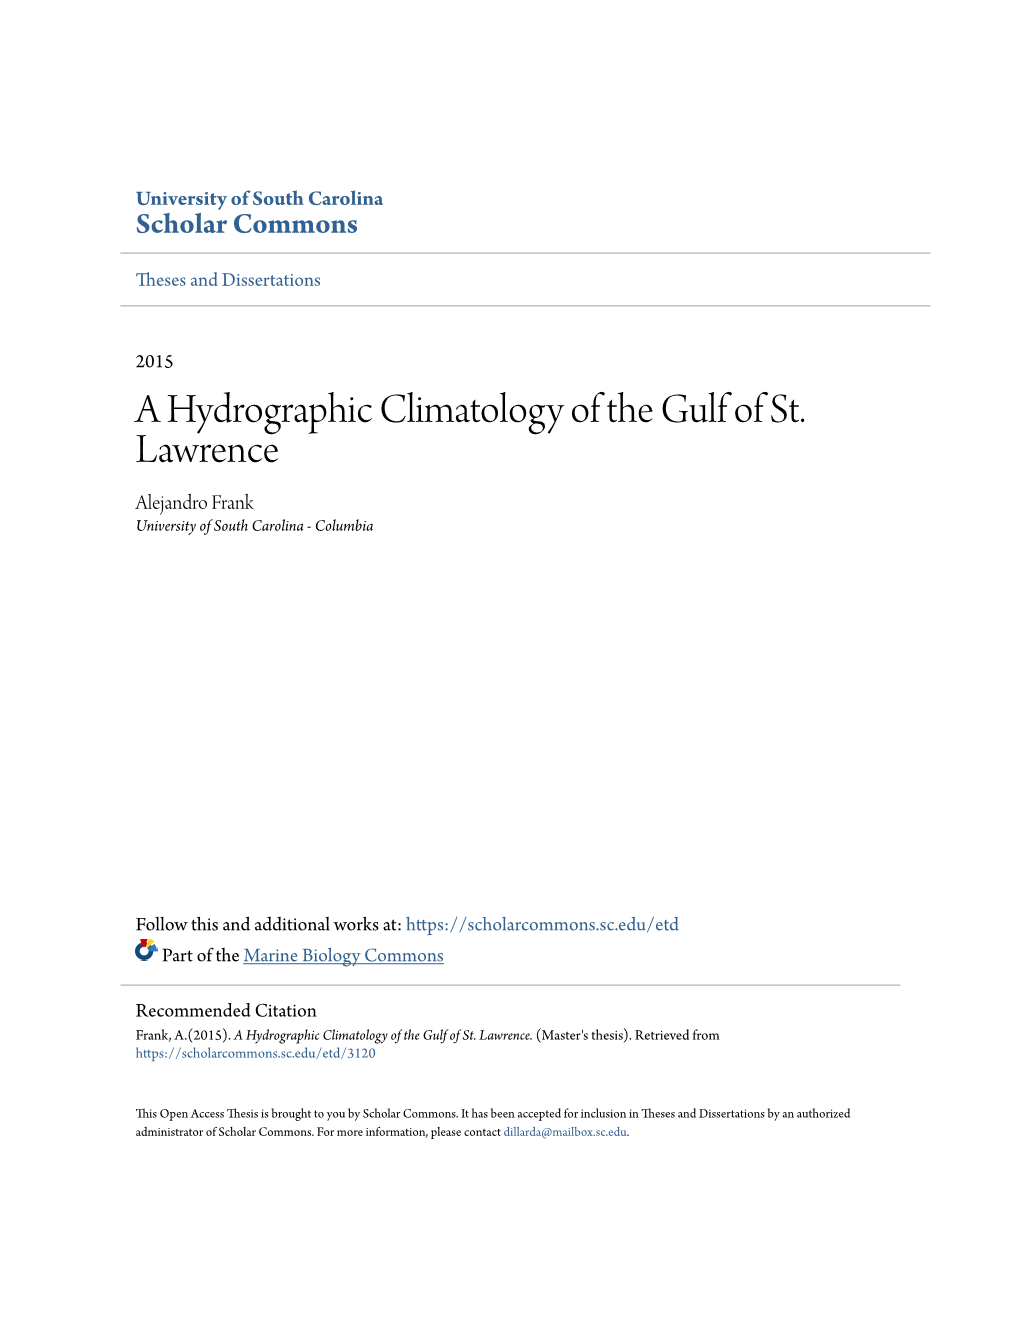 A Hydrographic Climatology of the Gulf of St. Lawrence Alejandro Frank University of South Carolina - Columbia